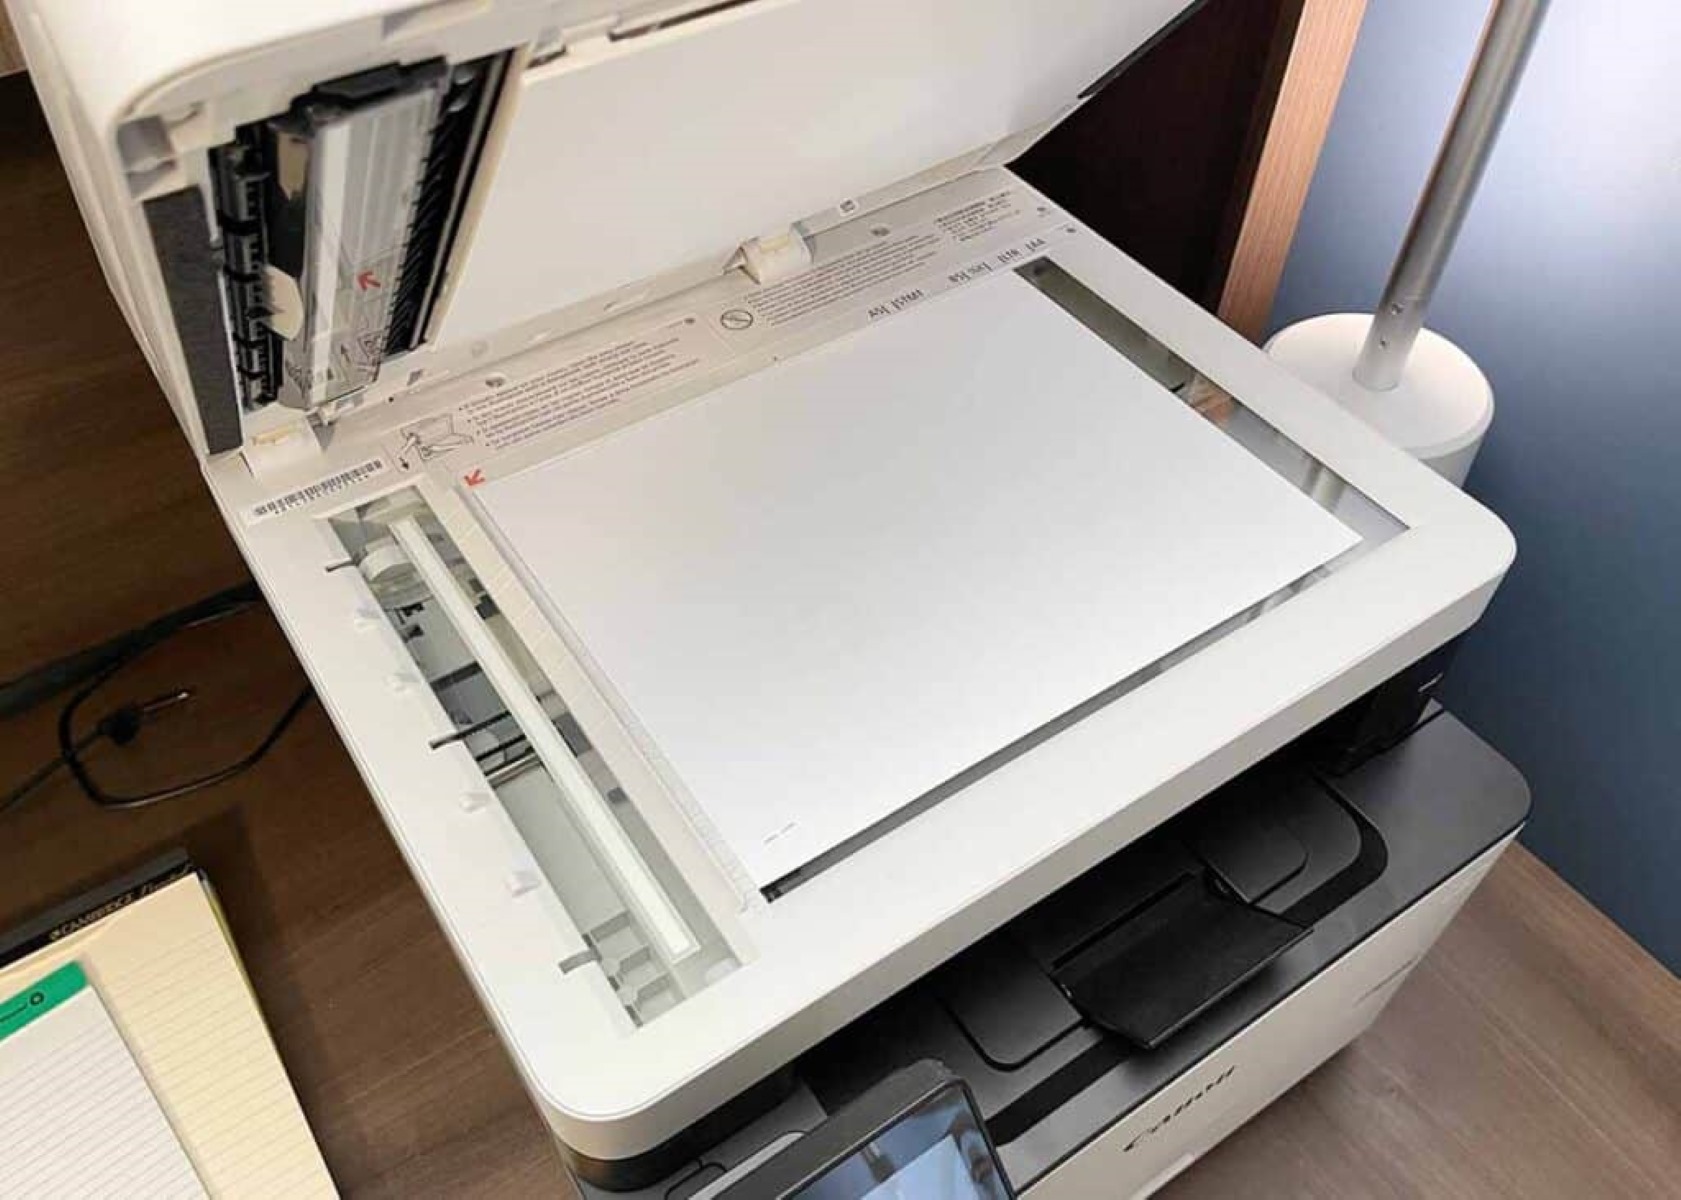 How To Photocopy On A Printer